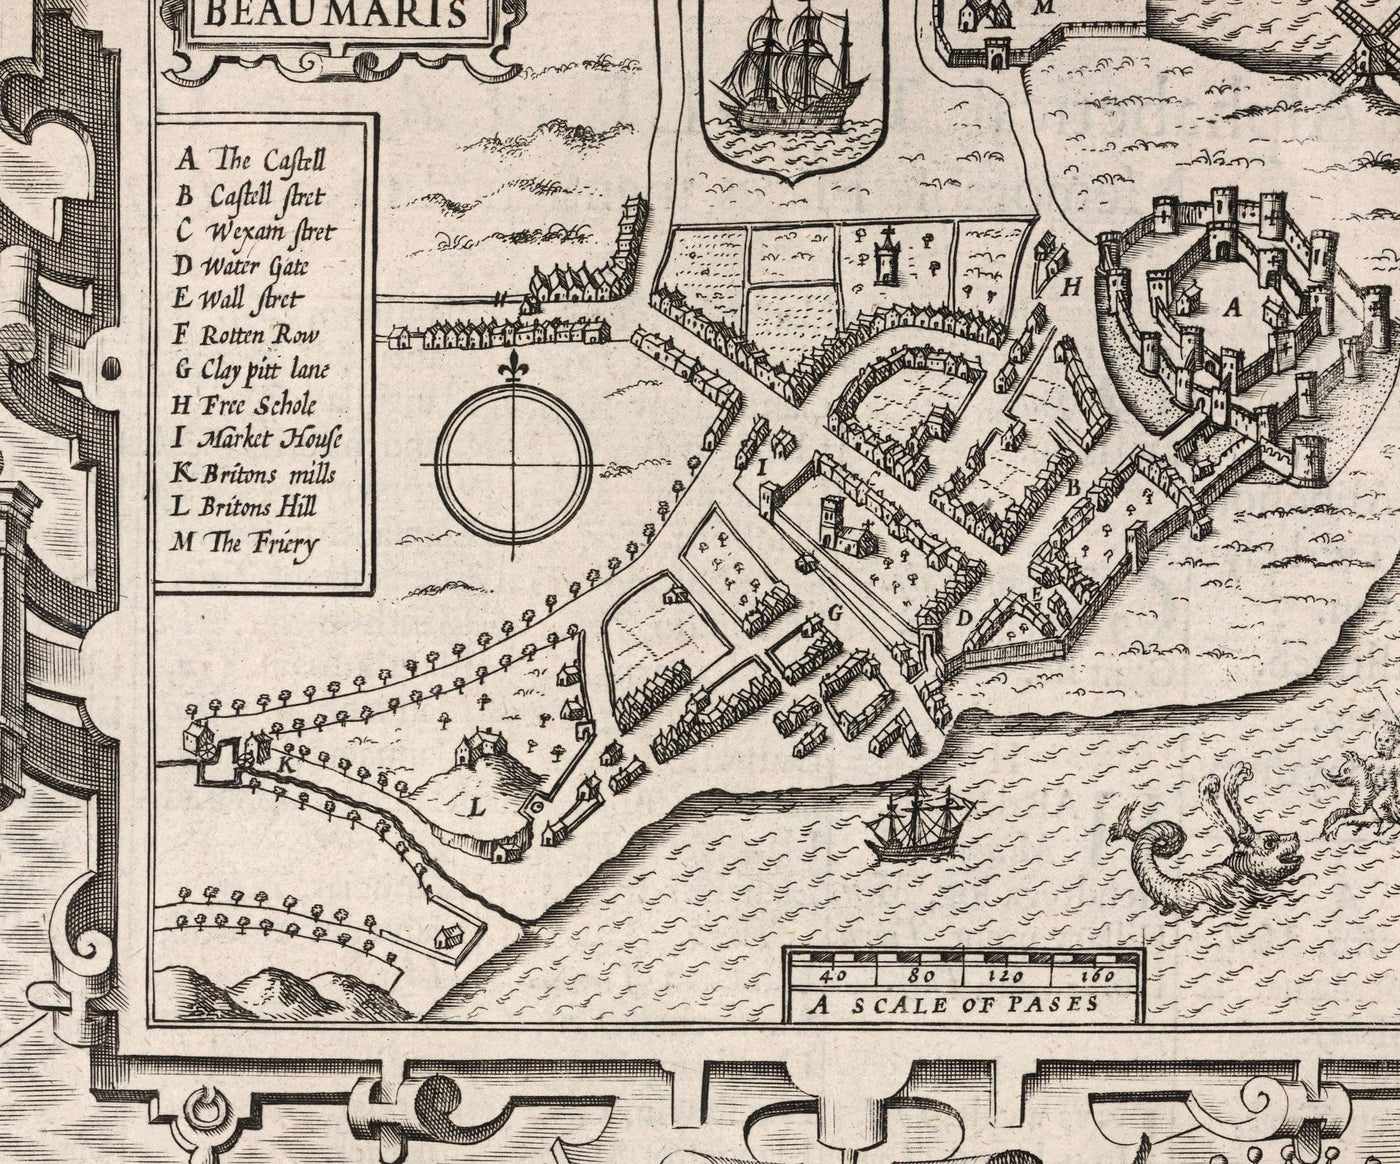 Alte monochrome Karte von Anglesey, Wales, 1611 von John Speed ​​- Holyhead, Llanfairpwllgwyngyll, Bangor